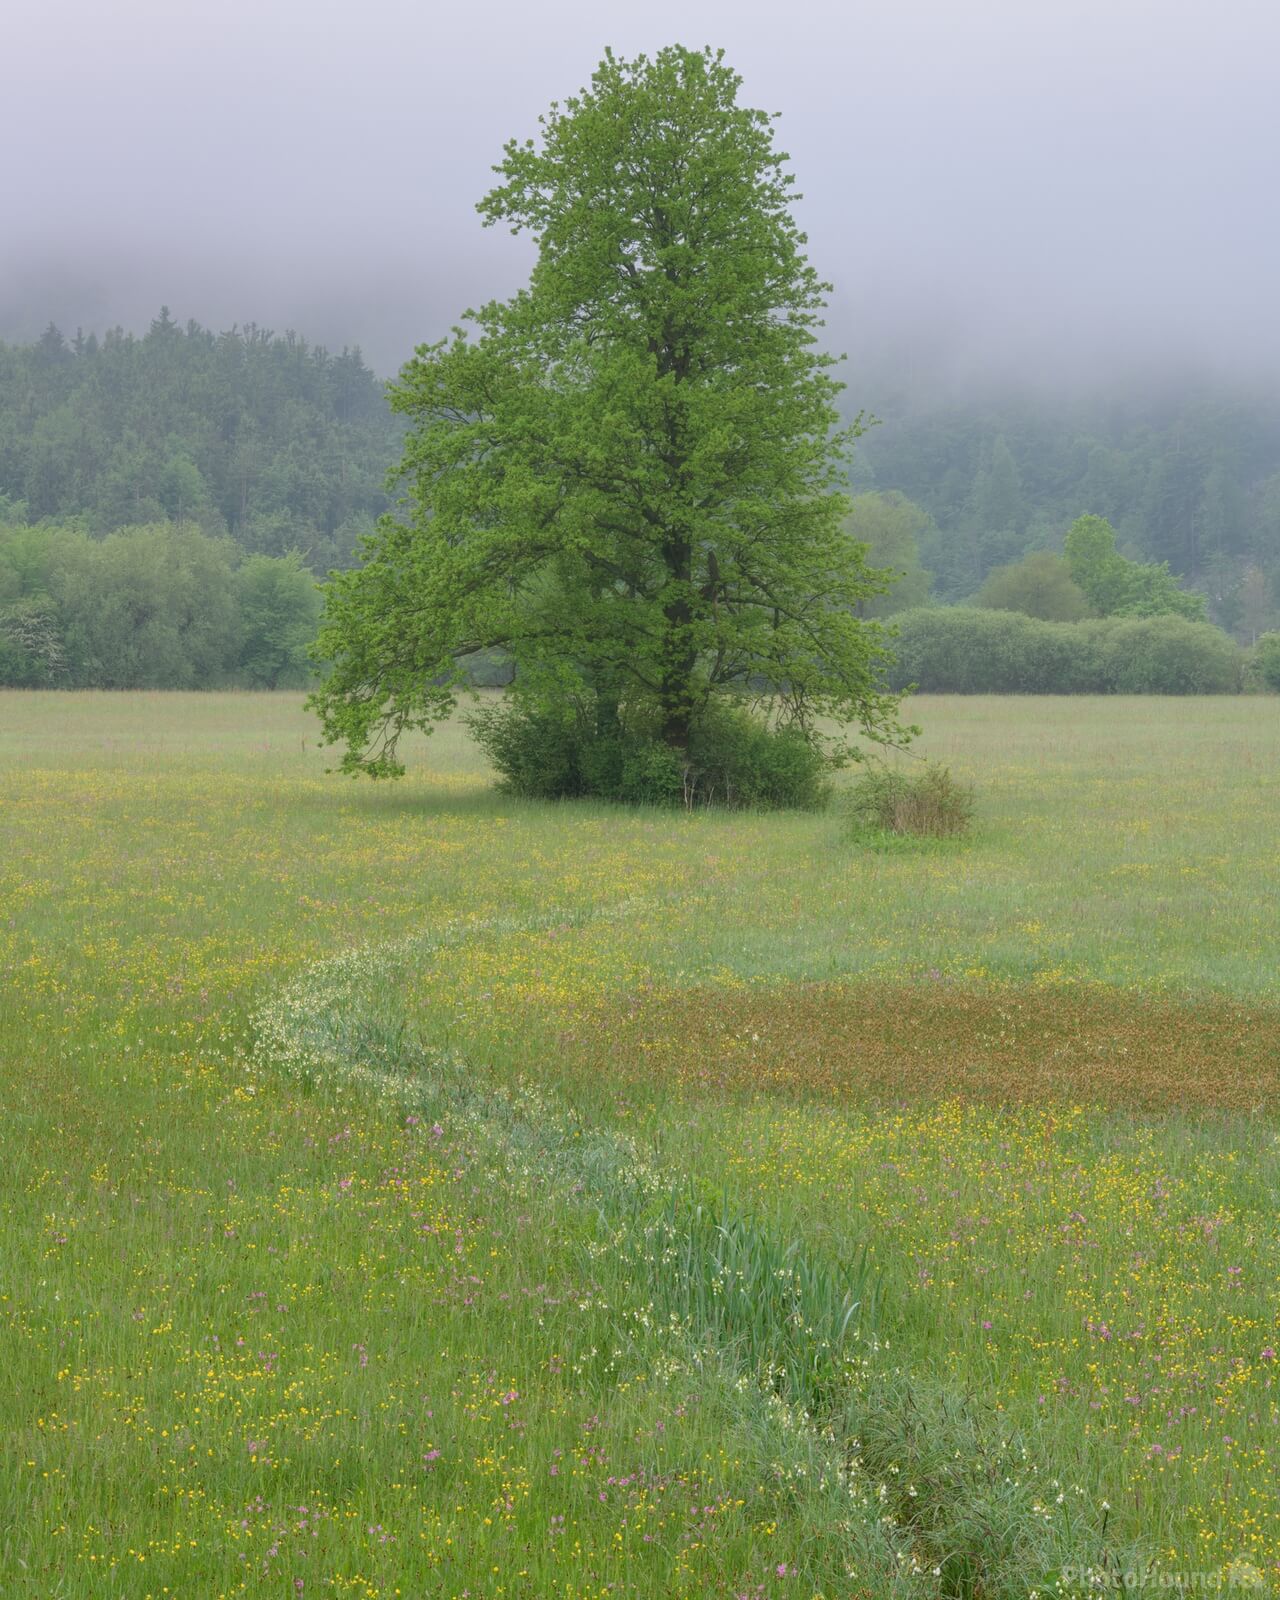 Image of Planinsko Polje (Planina Plains) by Luka Esenko